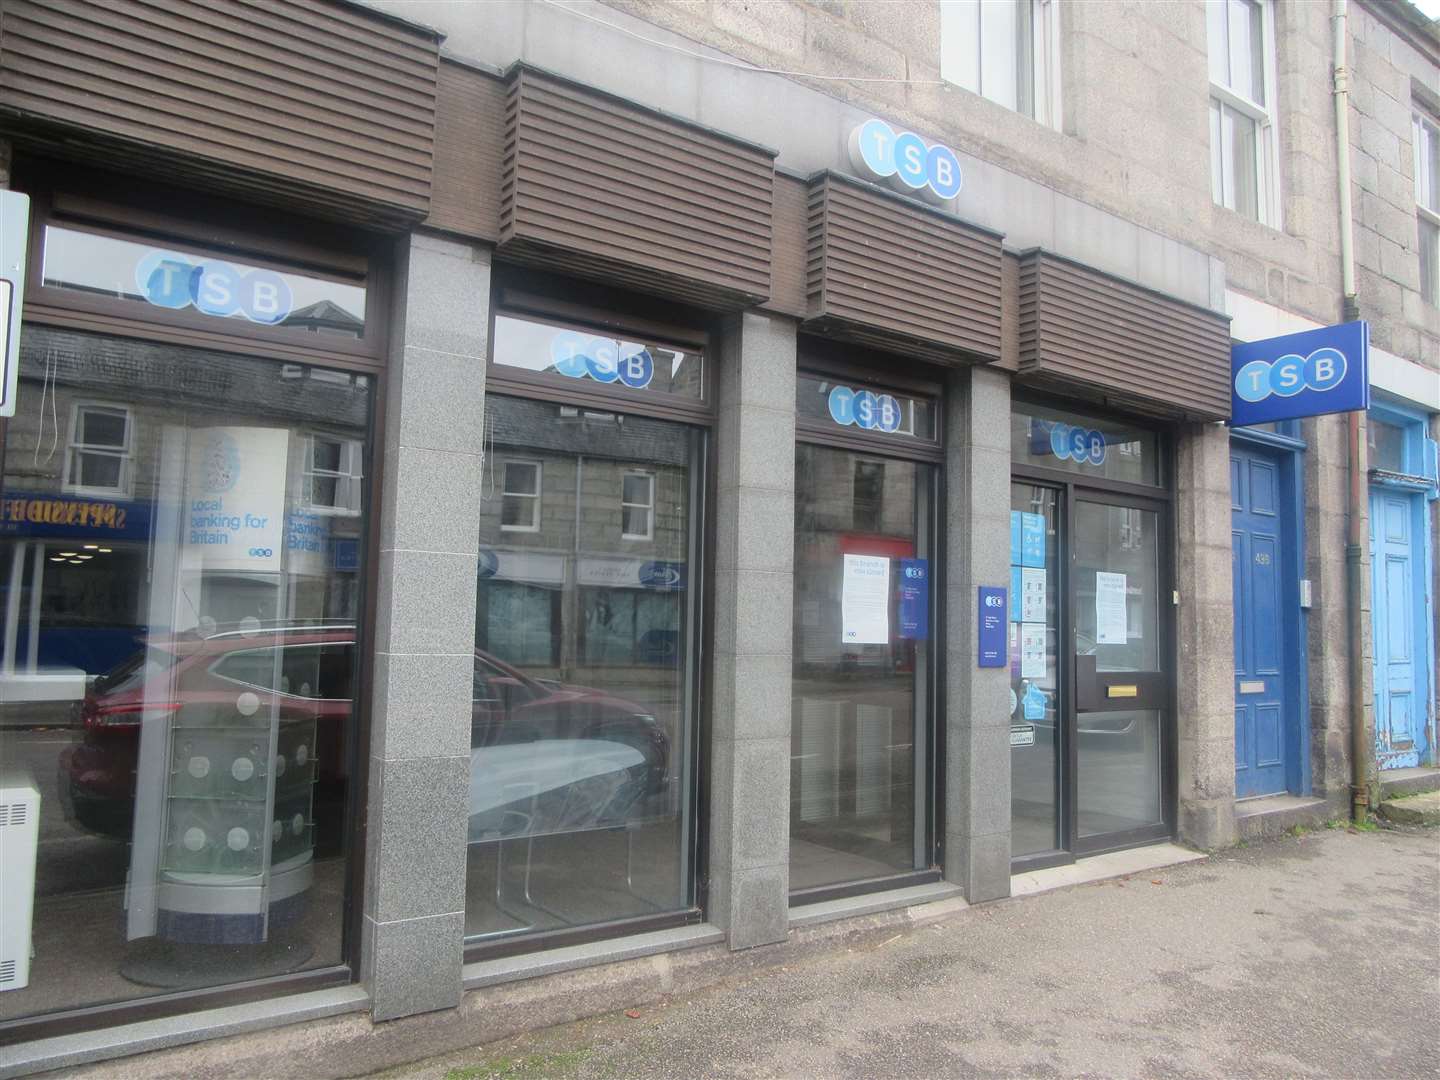 The former TSB branch in Grantown